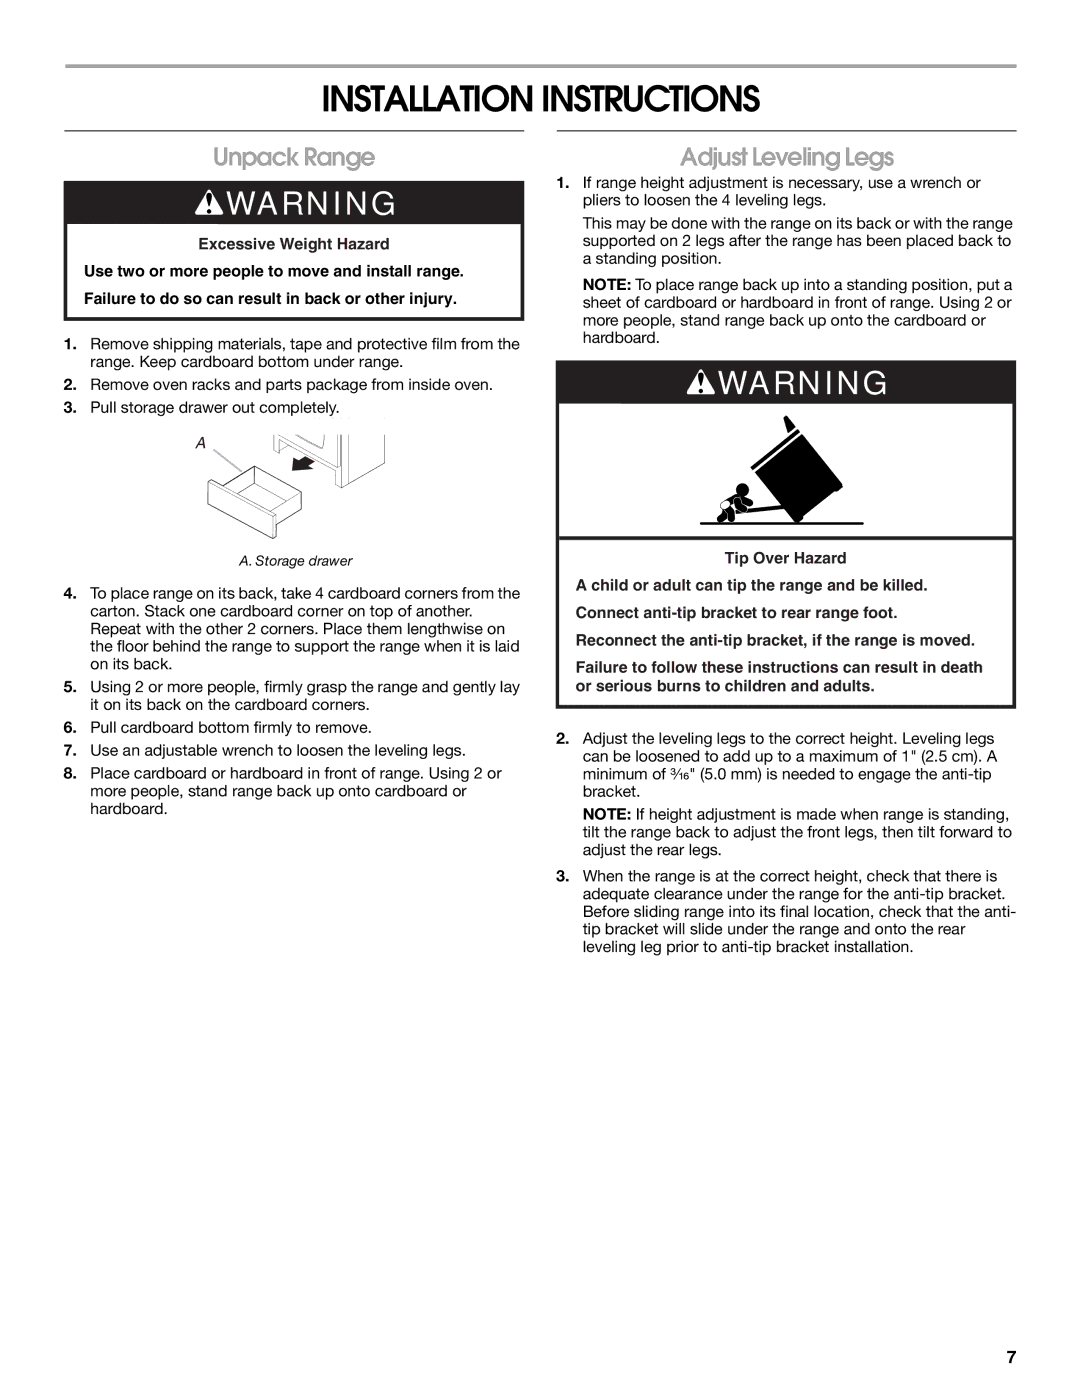 KitchenAid Freestanding Gas Ranges installation instructions Installation Instructions, Unpack Range, Adjust Leveling Legs 